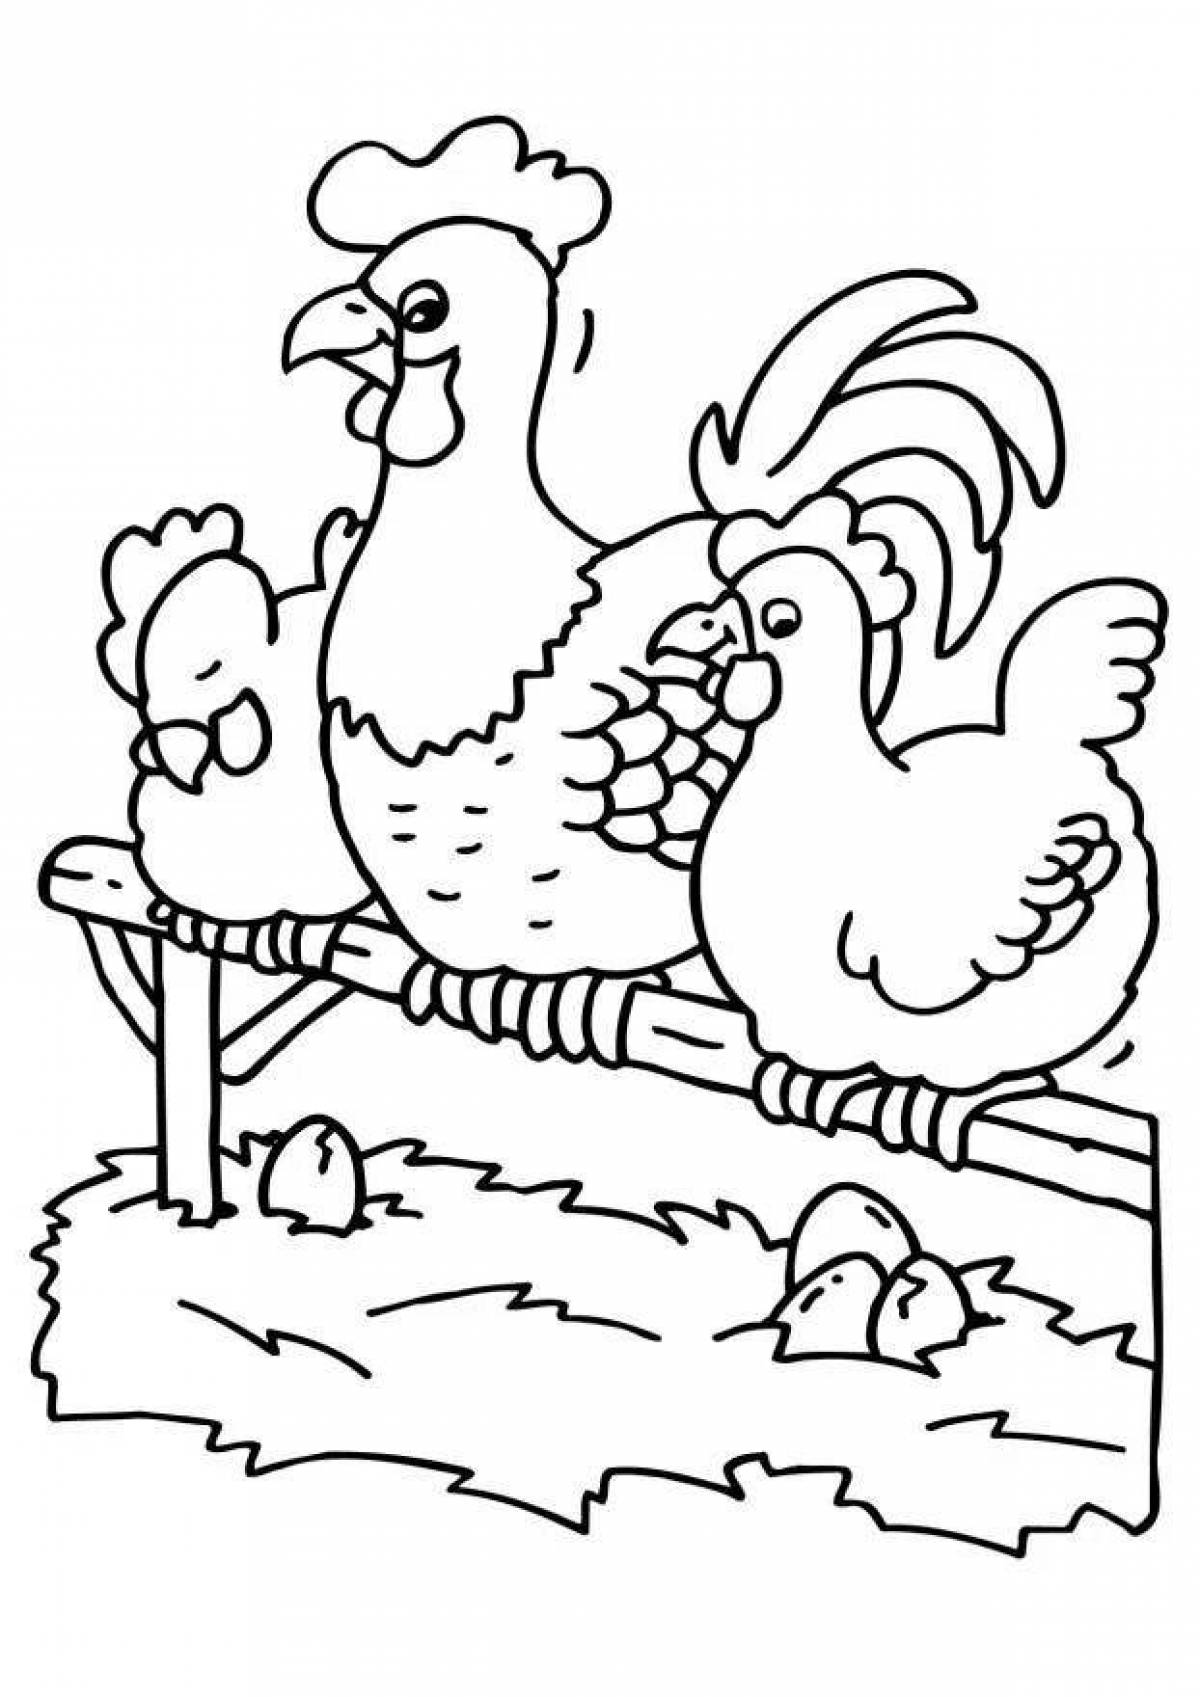 Развлекательная раскраска петух и курица